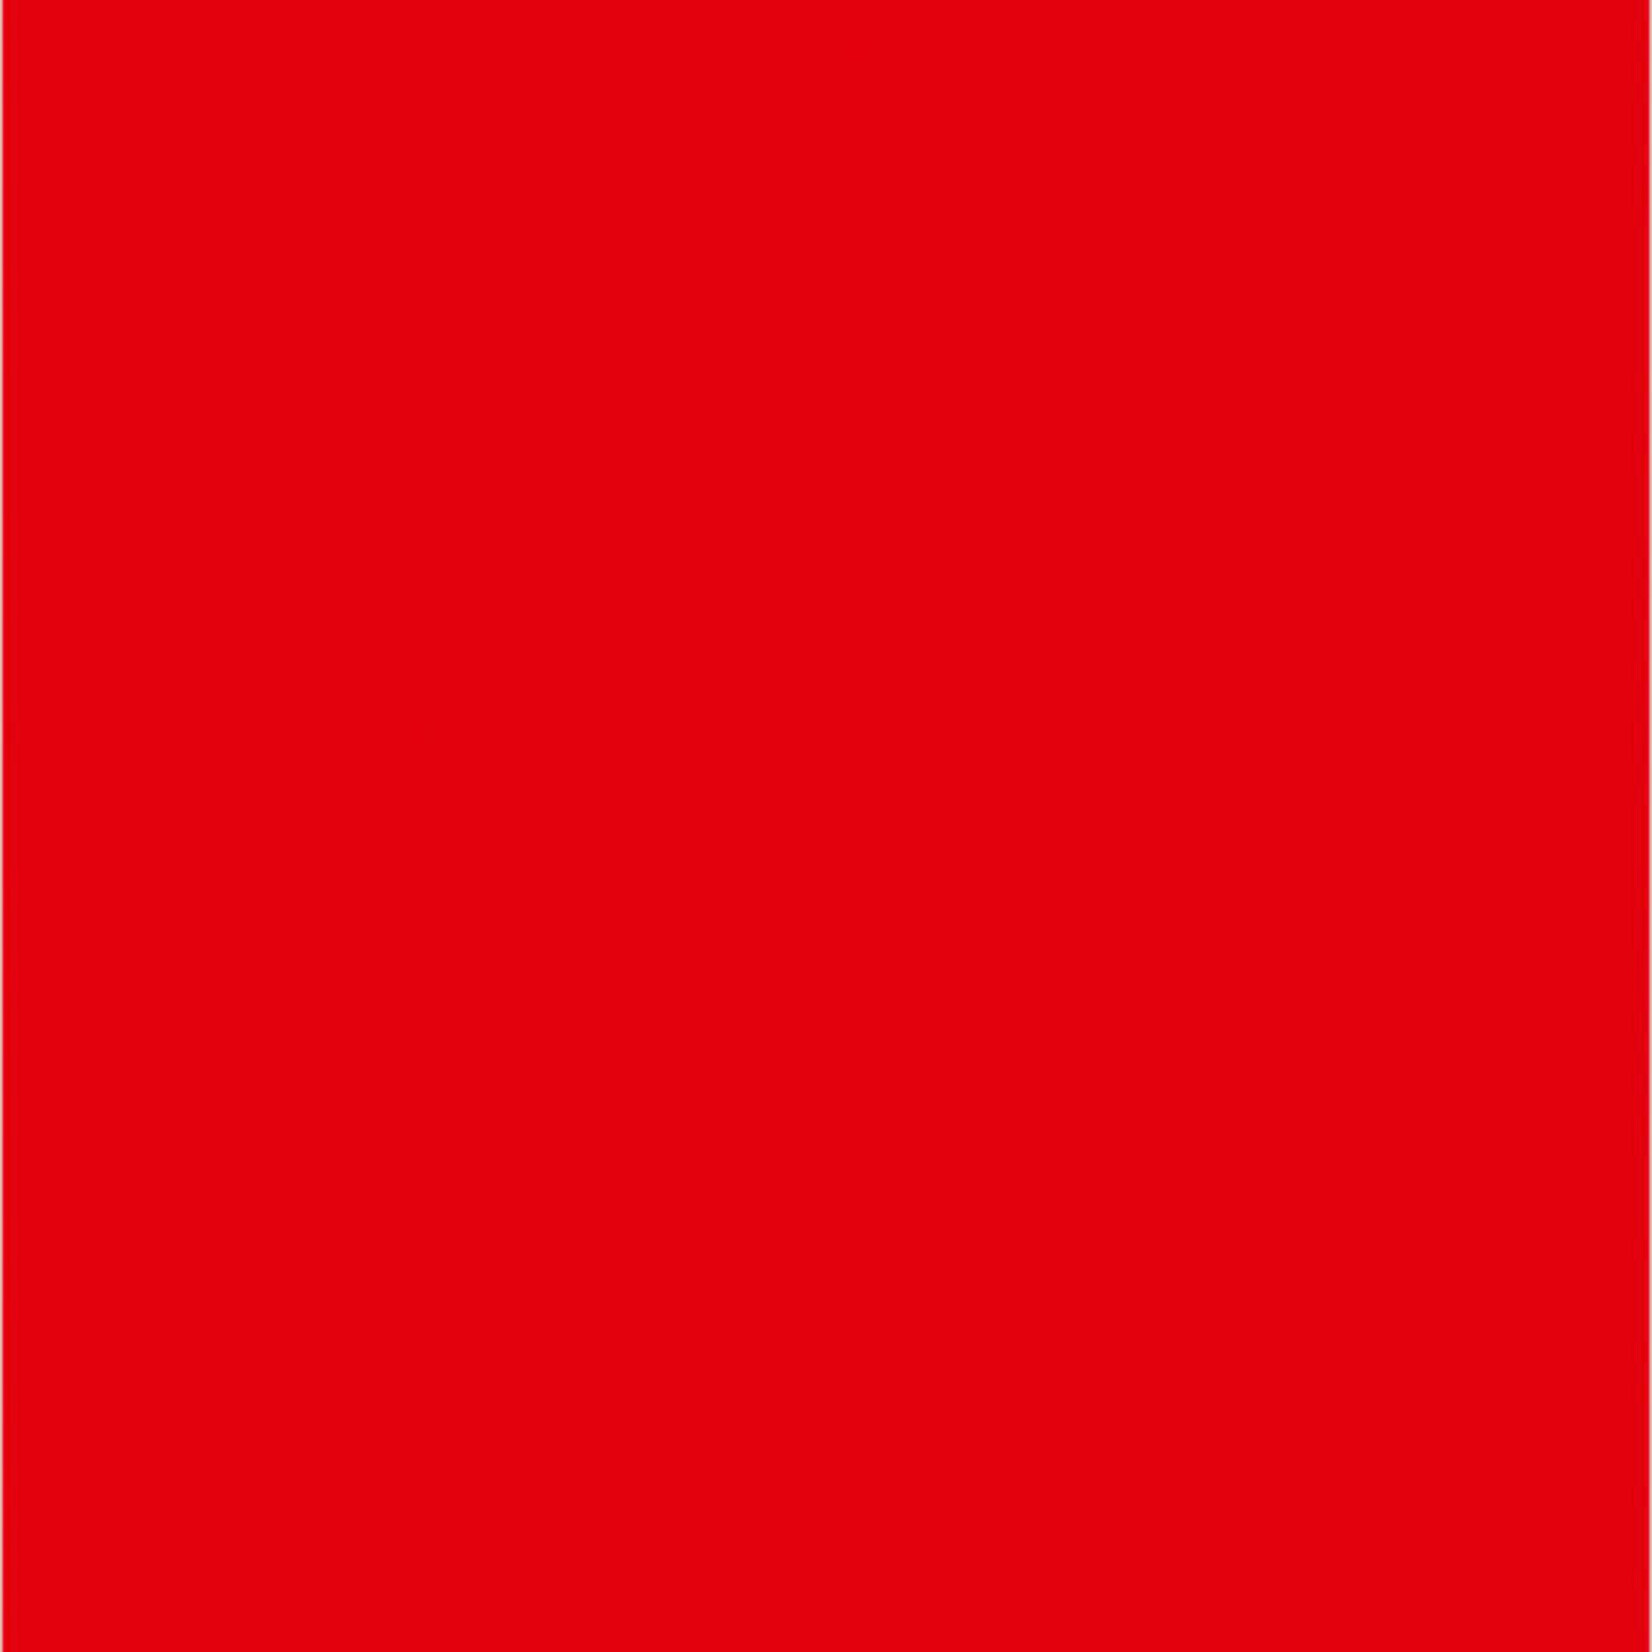 [New] Conrad Schnitzler - Rot (50th Anniversary Edition, red vinyl)